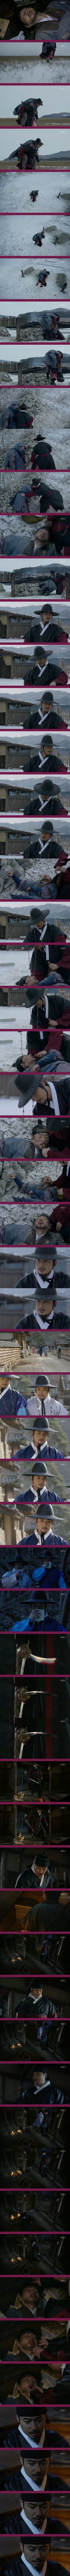 episodes 14 and 15 captures for the Korean drama 'Jang Yeong-sil - Drama'